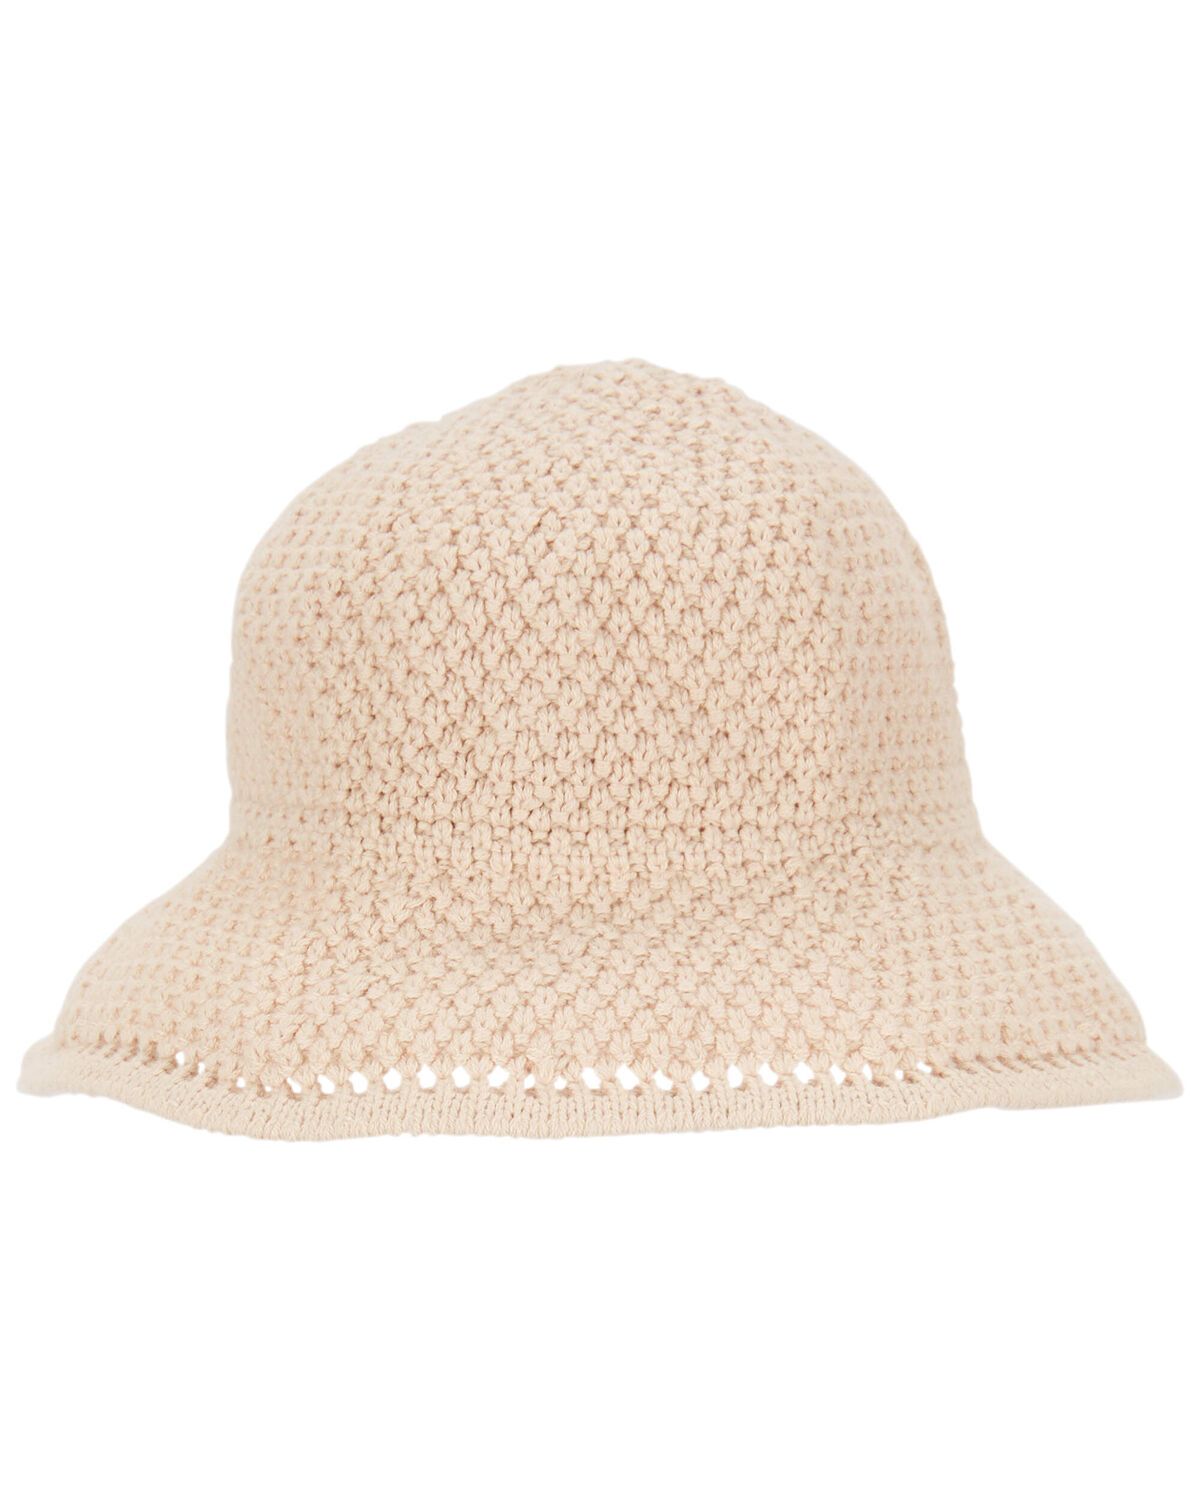 Tan Baby Crochet Sun Hat | carters.com | Carter's